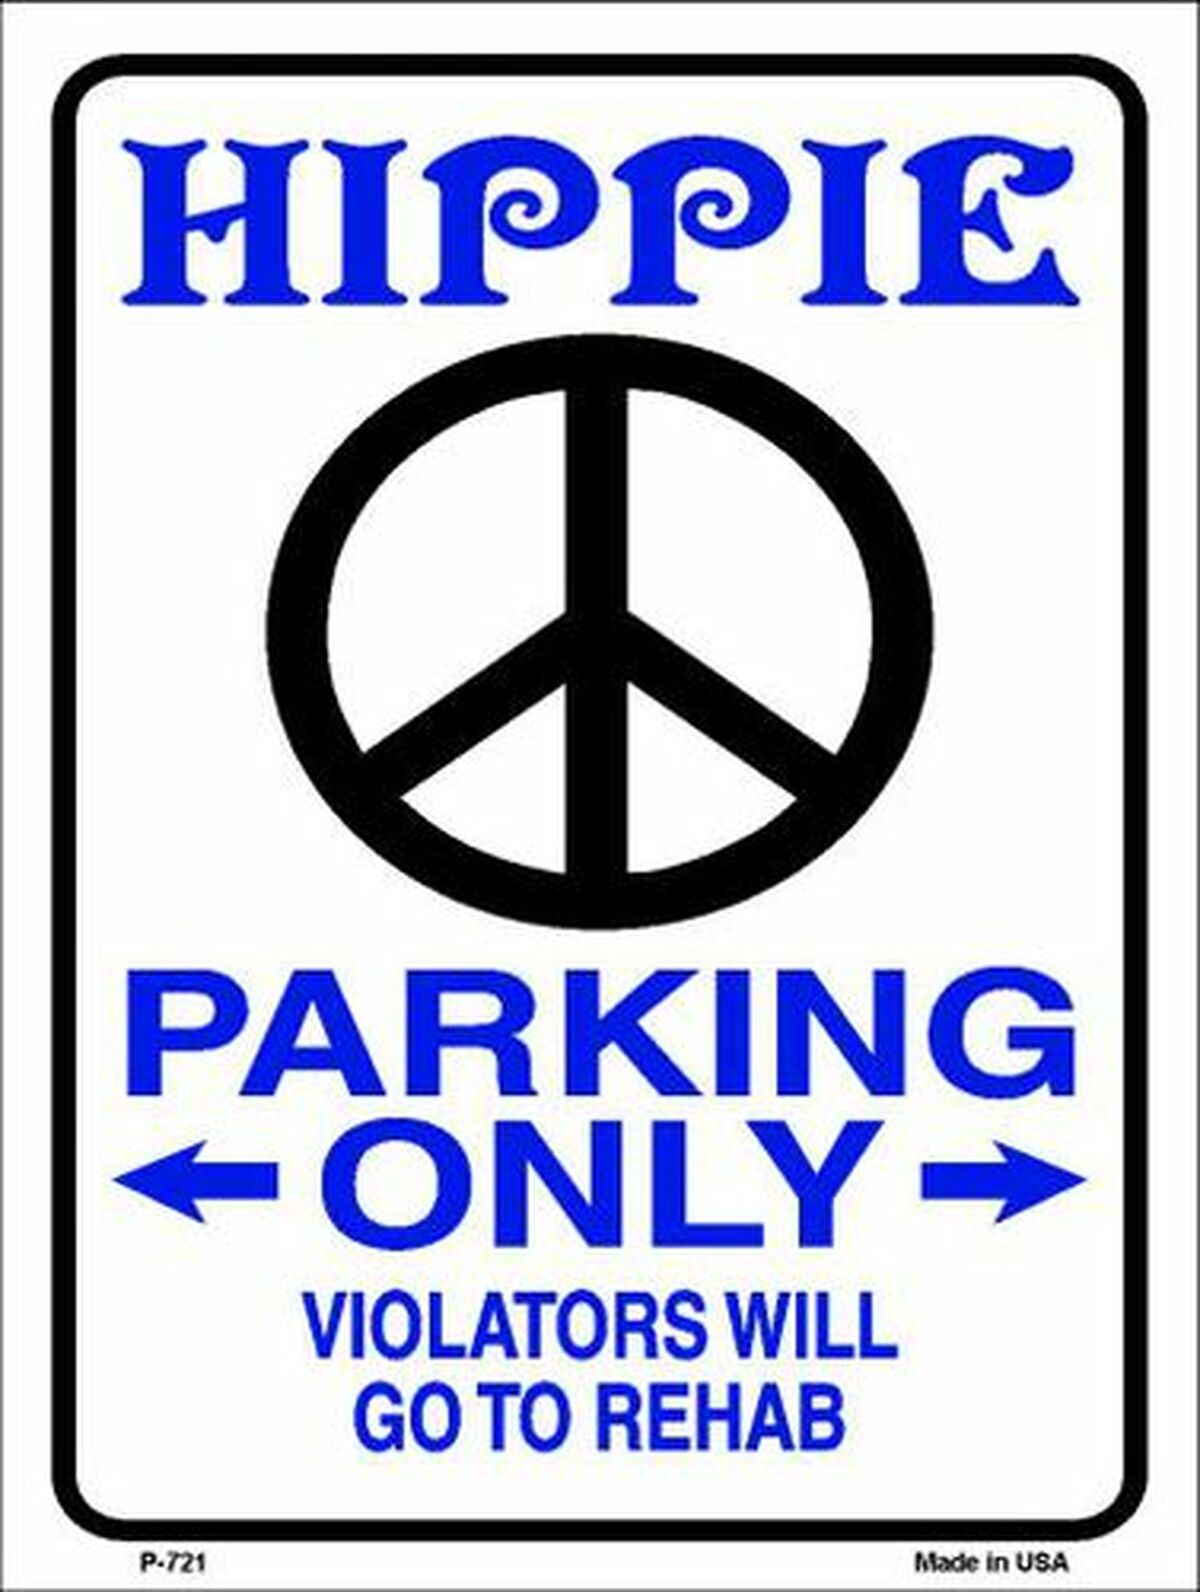 Hippie Parking Only Violators Go to Rehab Metallic Parking Sign 